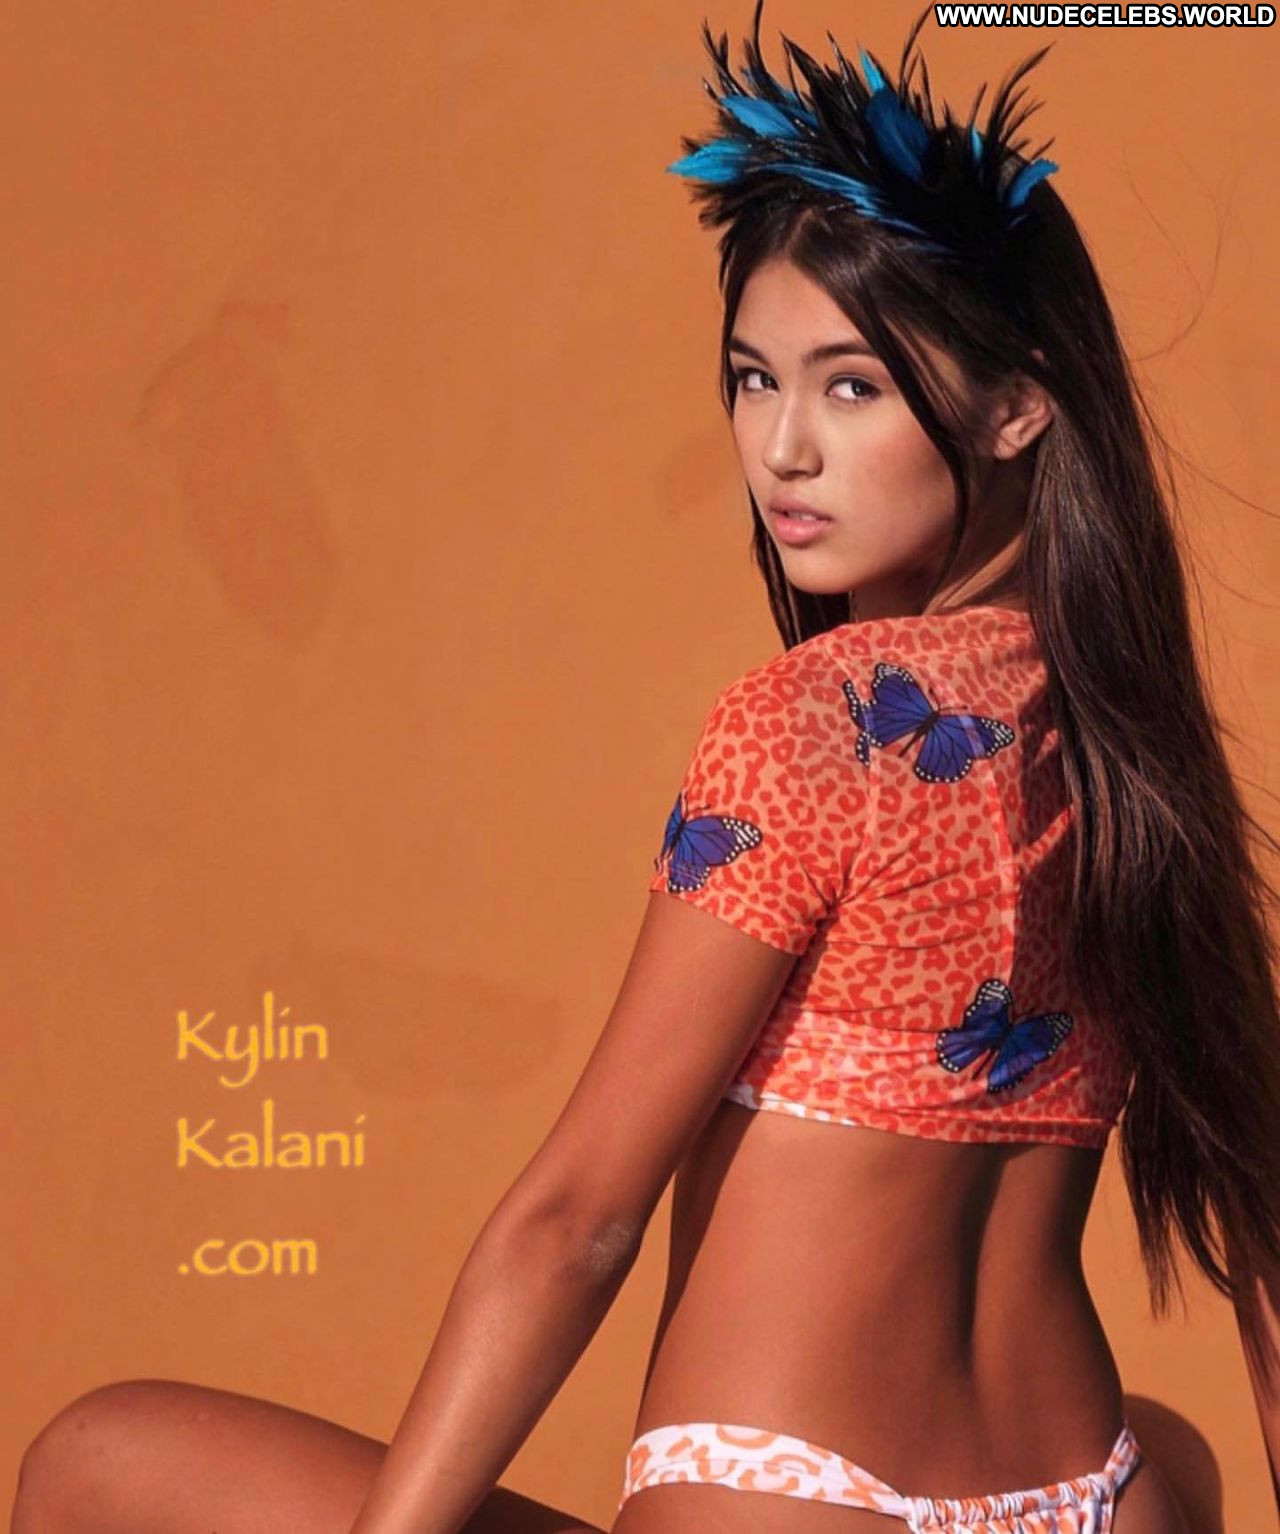 Kylin Kalani Naked